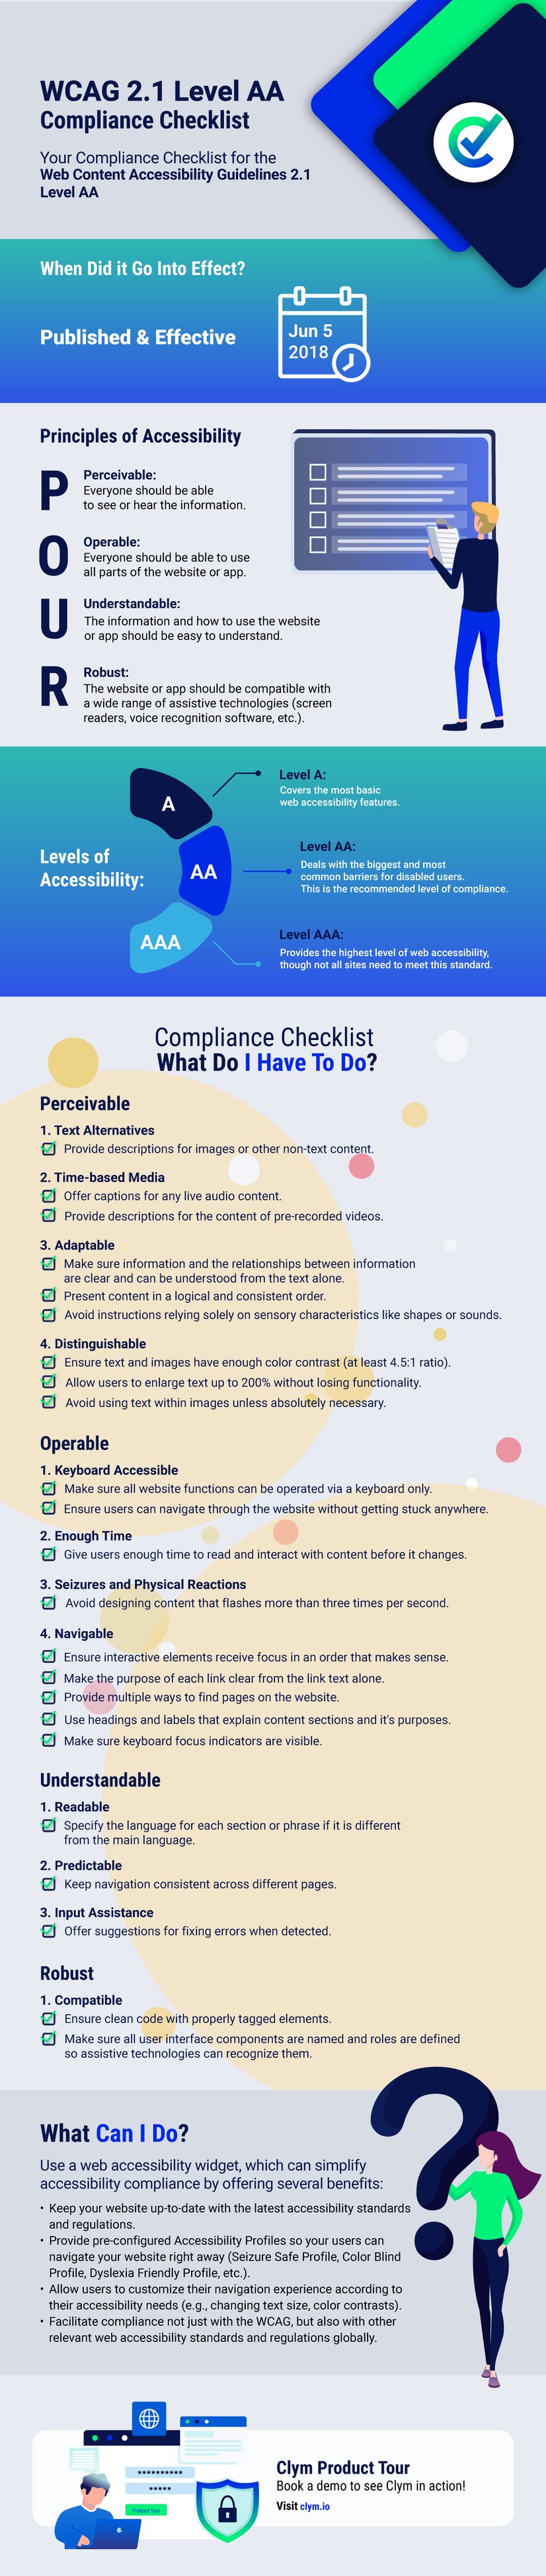 WCAG Compliance Checklist